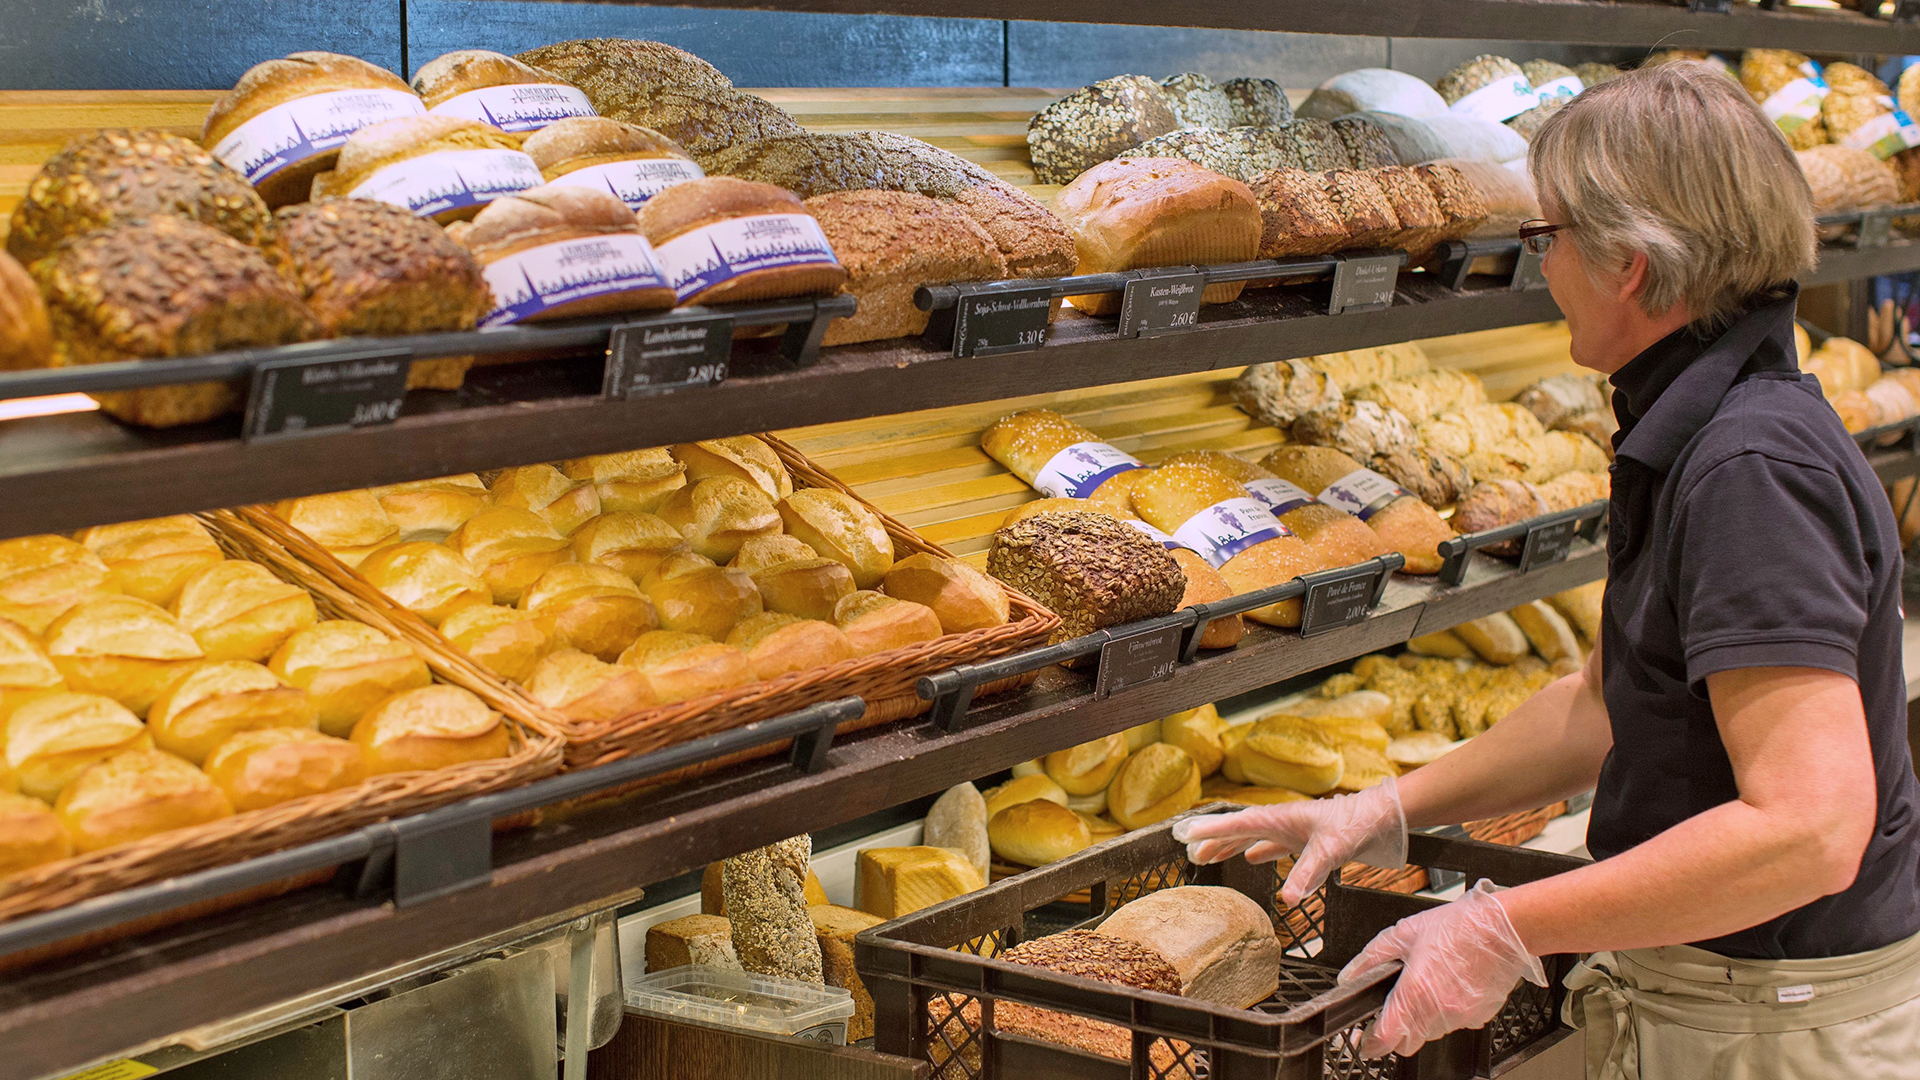 Bäckereifachverkäuferin legt Brot in die Auslage | picture alliance/dpa